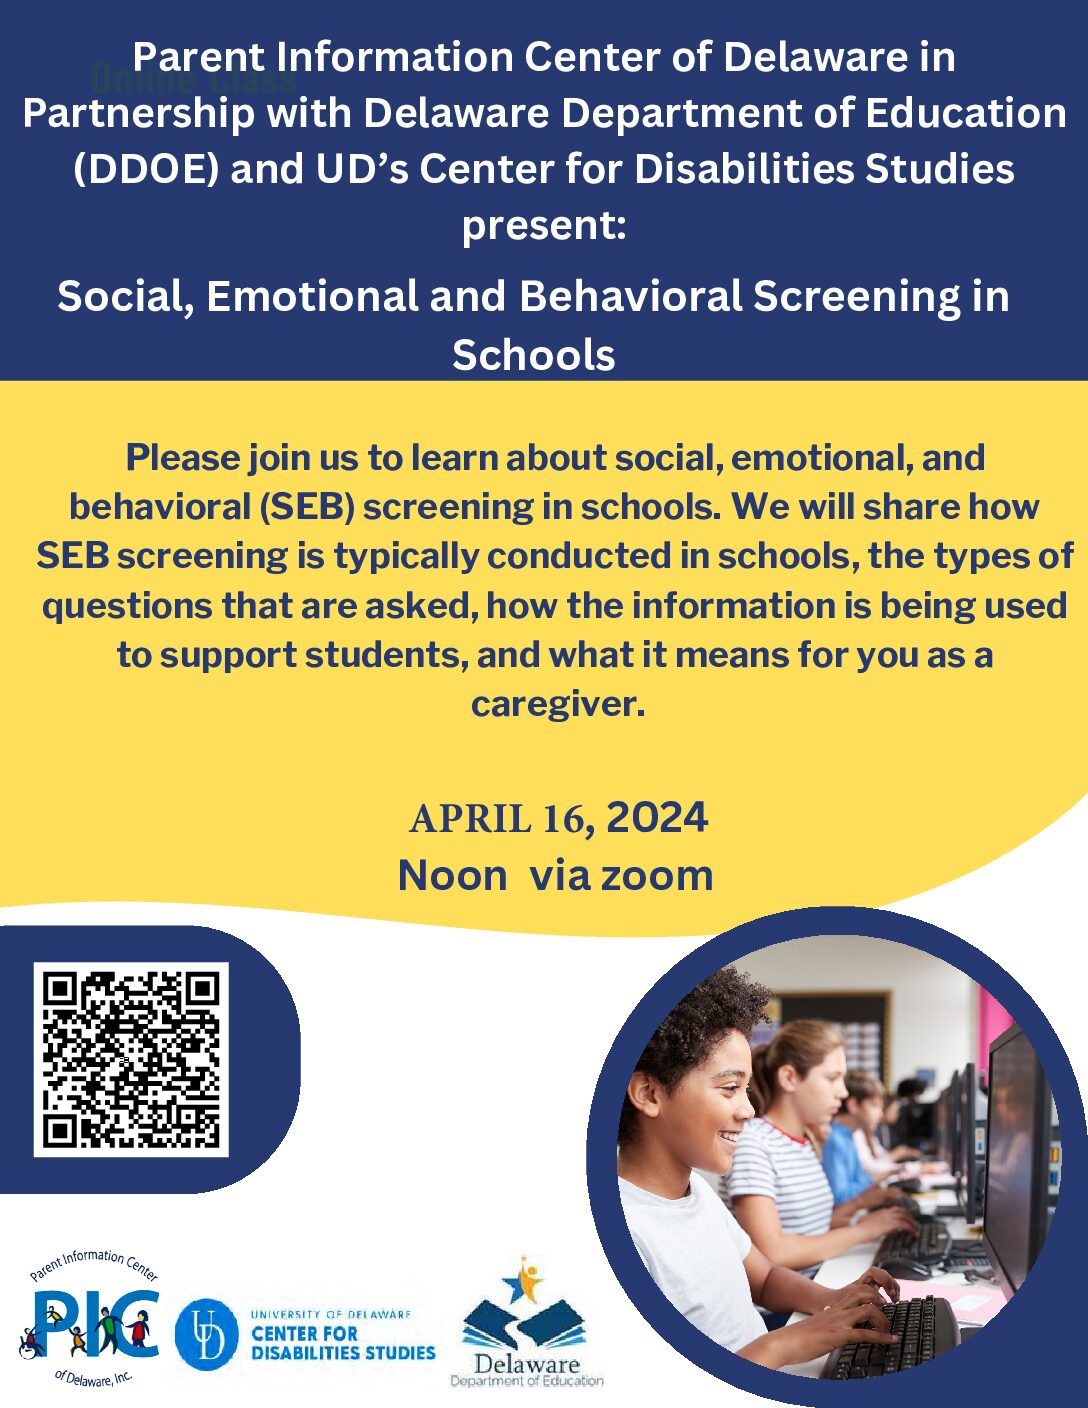 Social, Emotional and Behavioral Screening in Schools